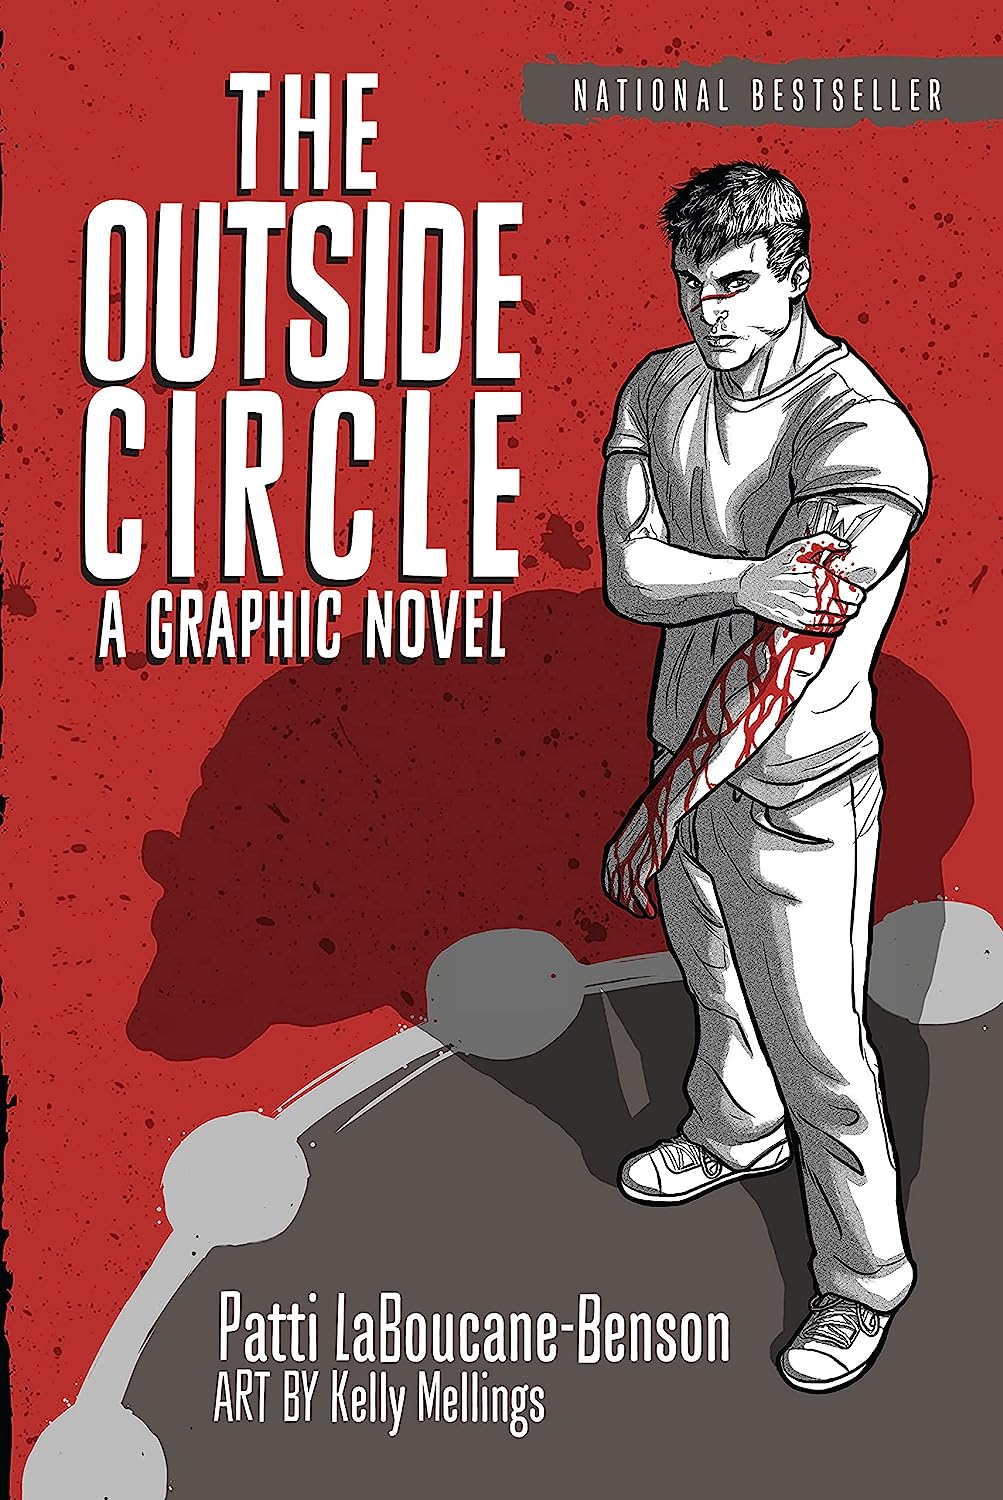 The Outside Circle: A Graphic Novel by Patti LaBoucane-Benson